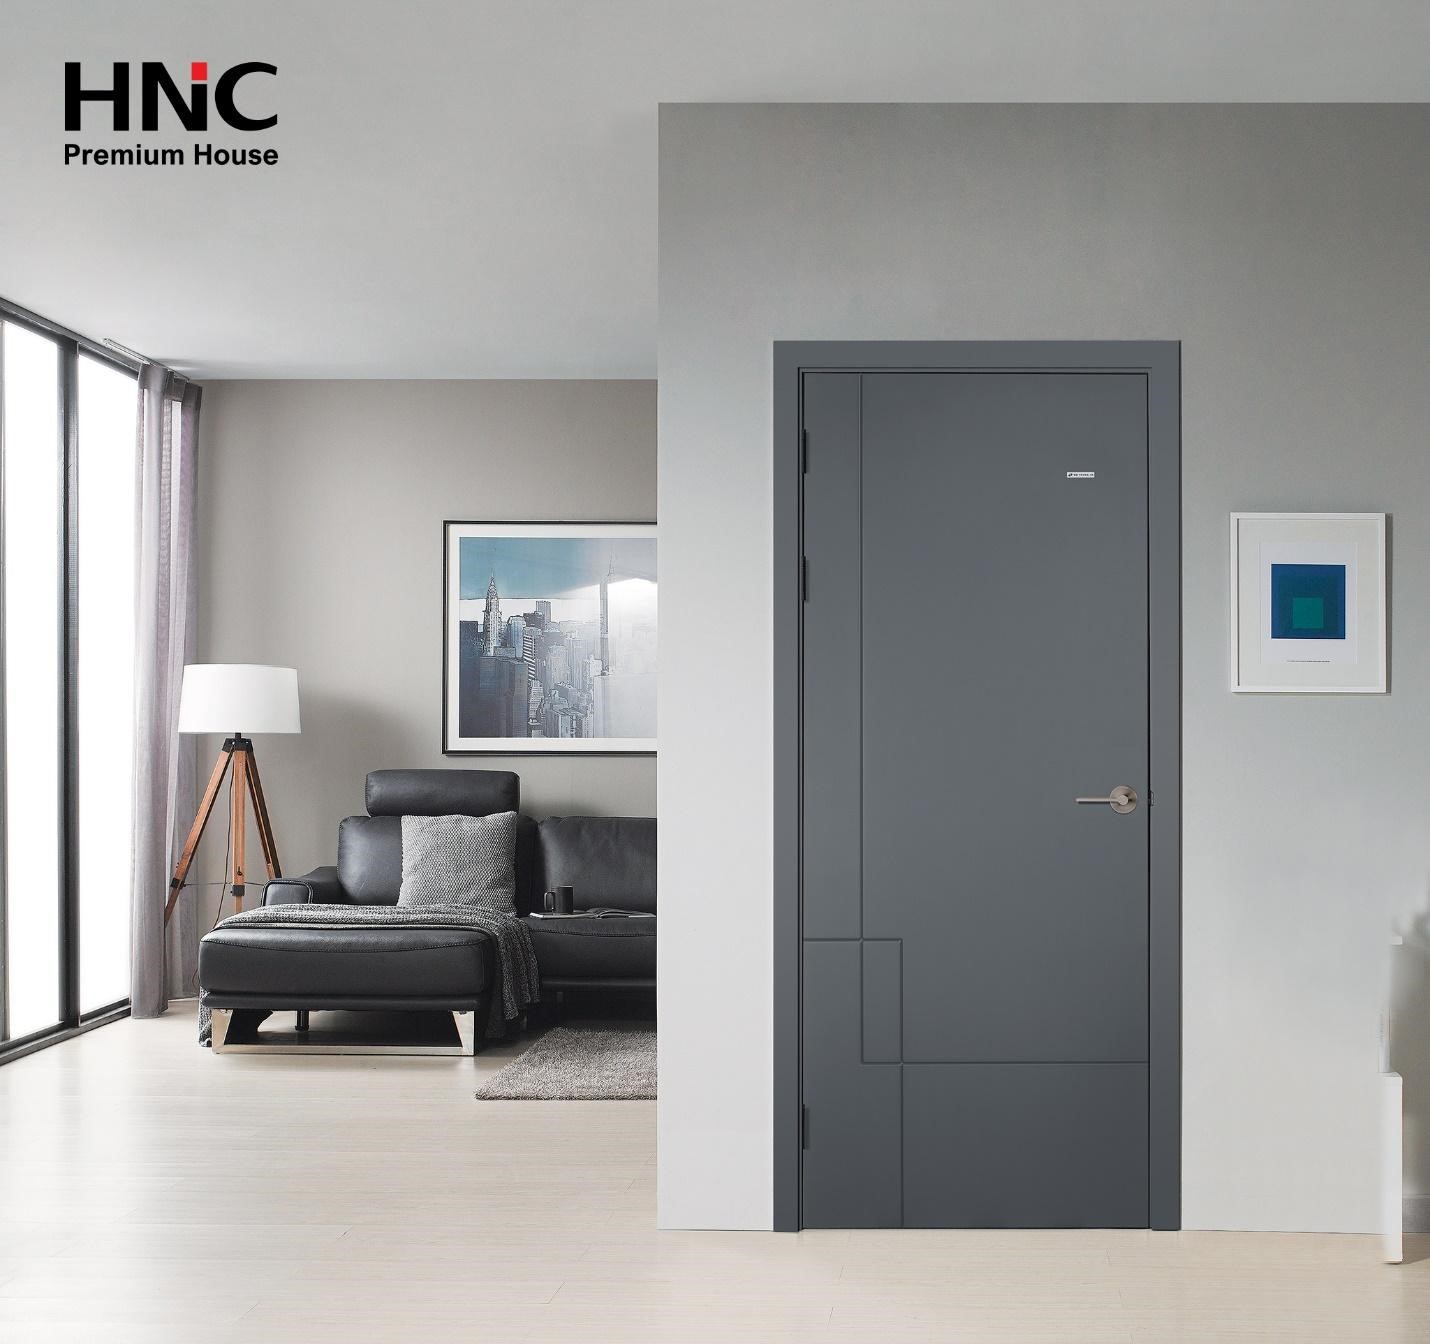 hnc-premium-house-2-1628665845.jpg